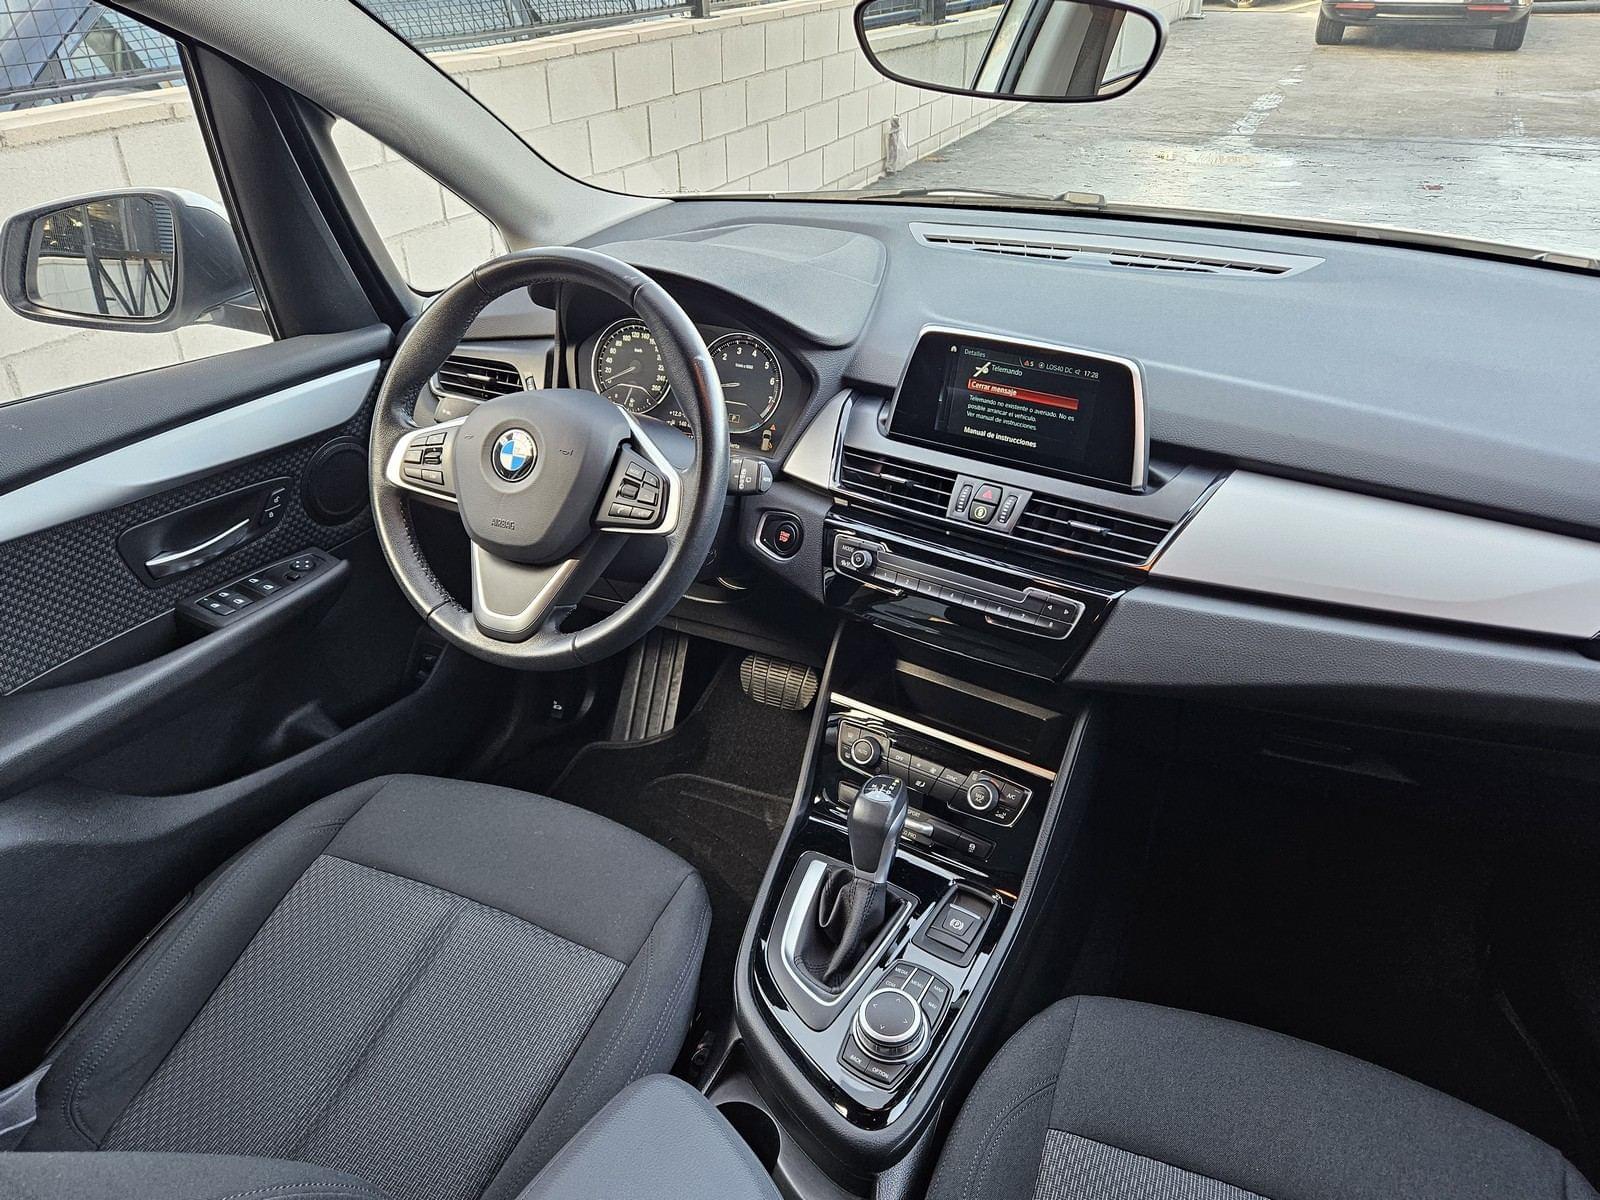 BMW SERIE 2 ACTIVE TOURER 225 XE IPERFORMANCE 1.5 135 CV AT6 E6DT 12 